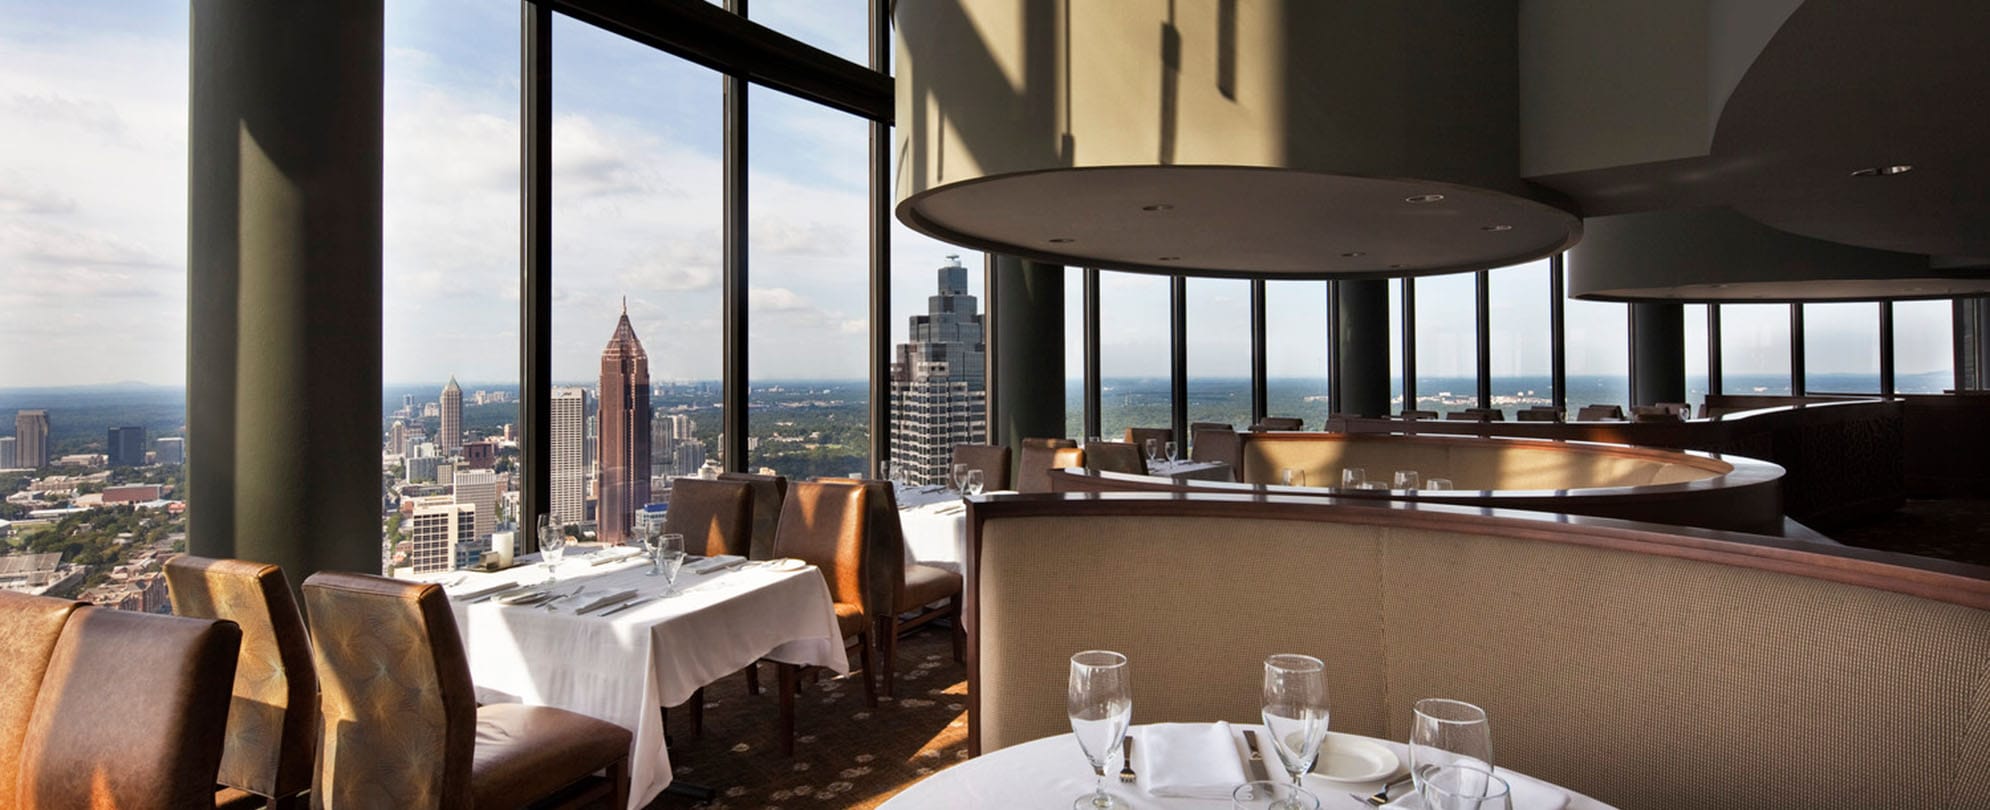 A high rise restaurant with a view of Atlanta, Georgia. 